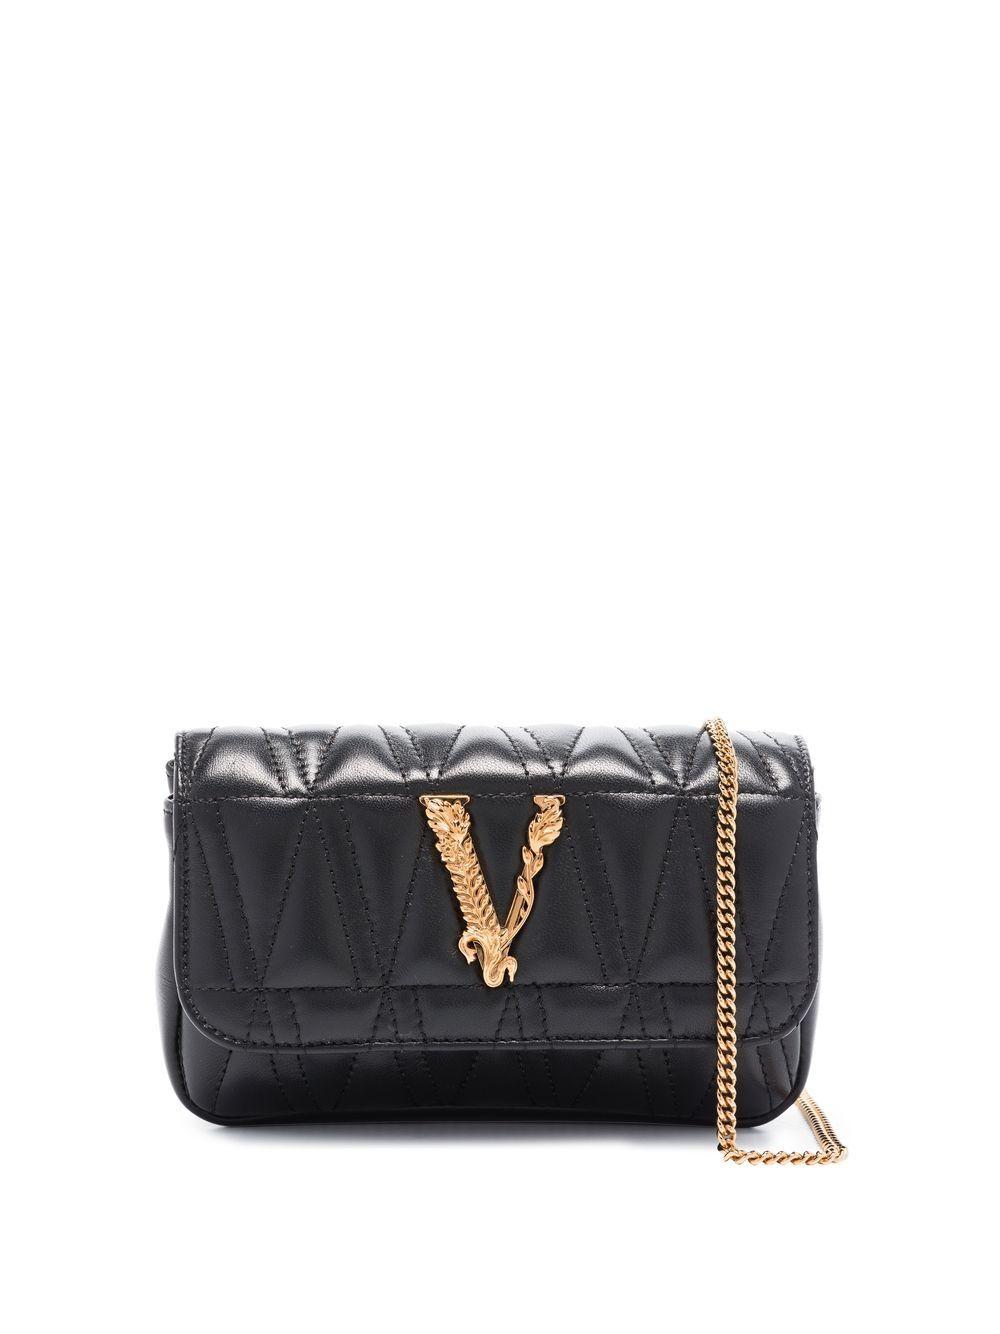 Versace Leather Virtus Crossbody Bag in Black | Lyst